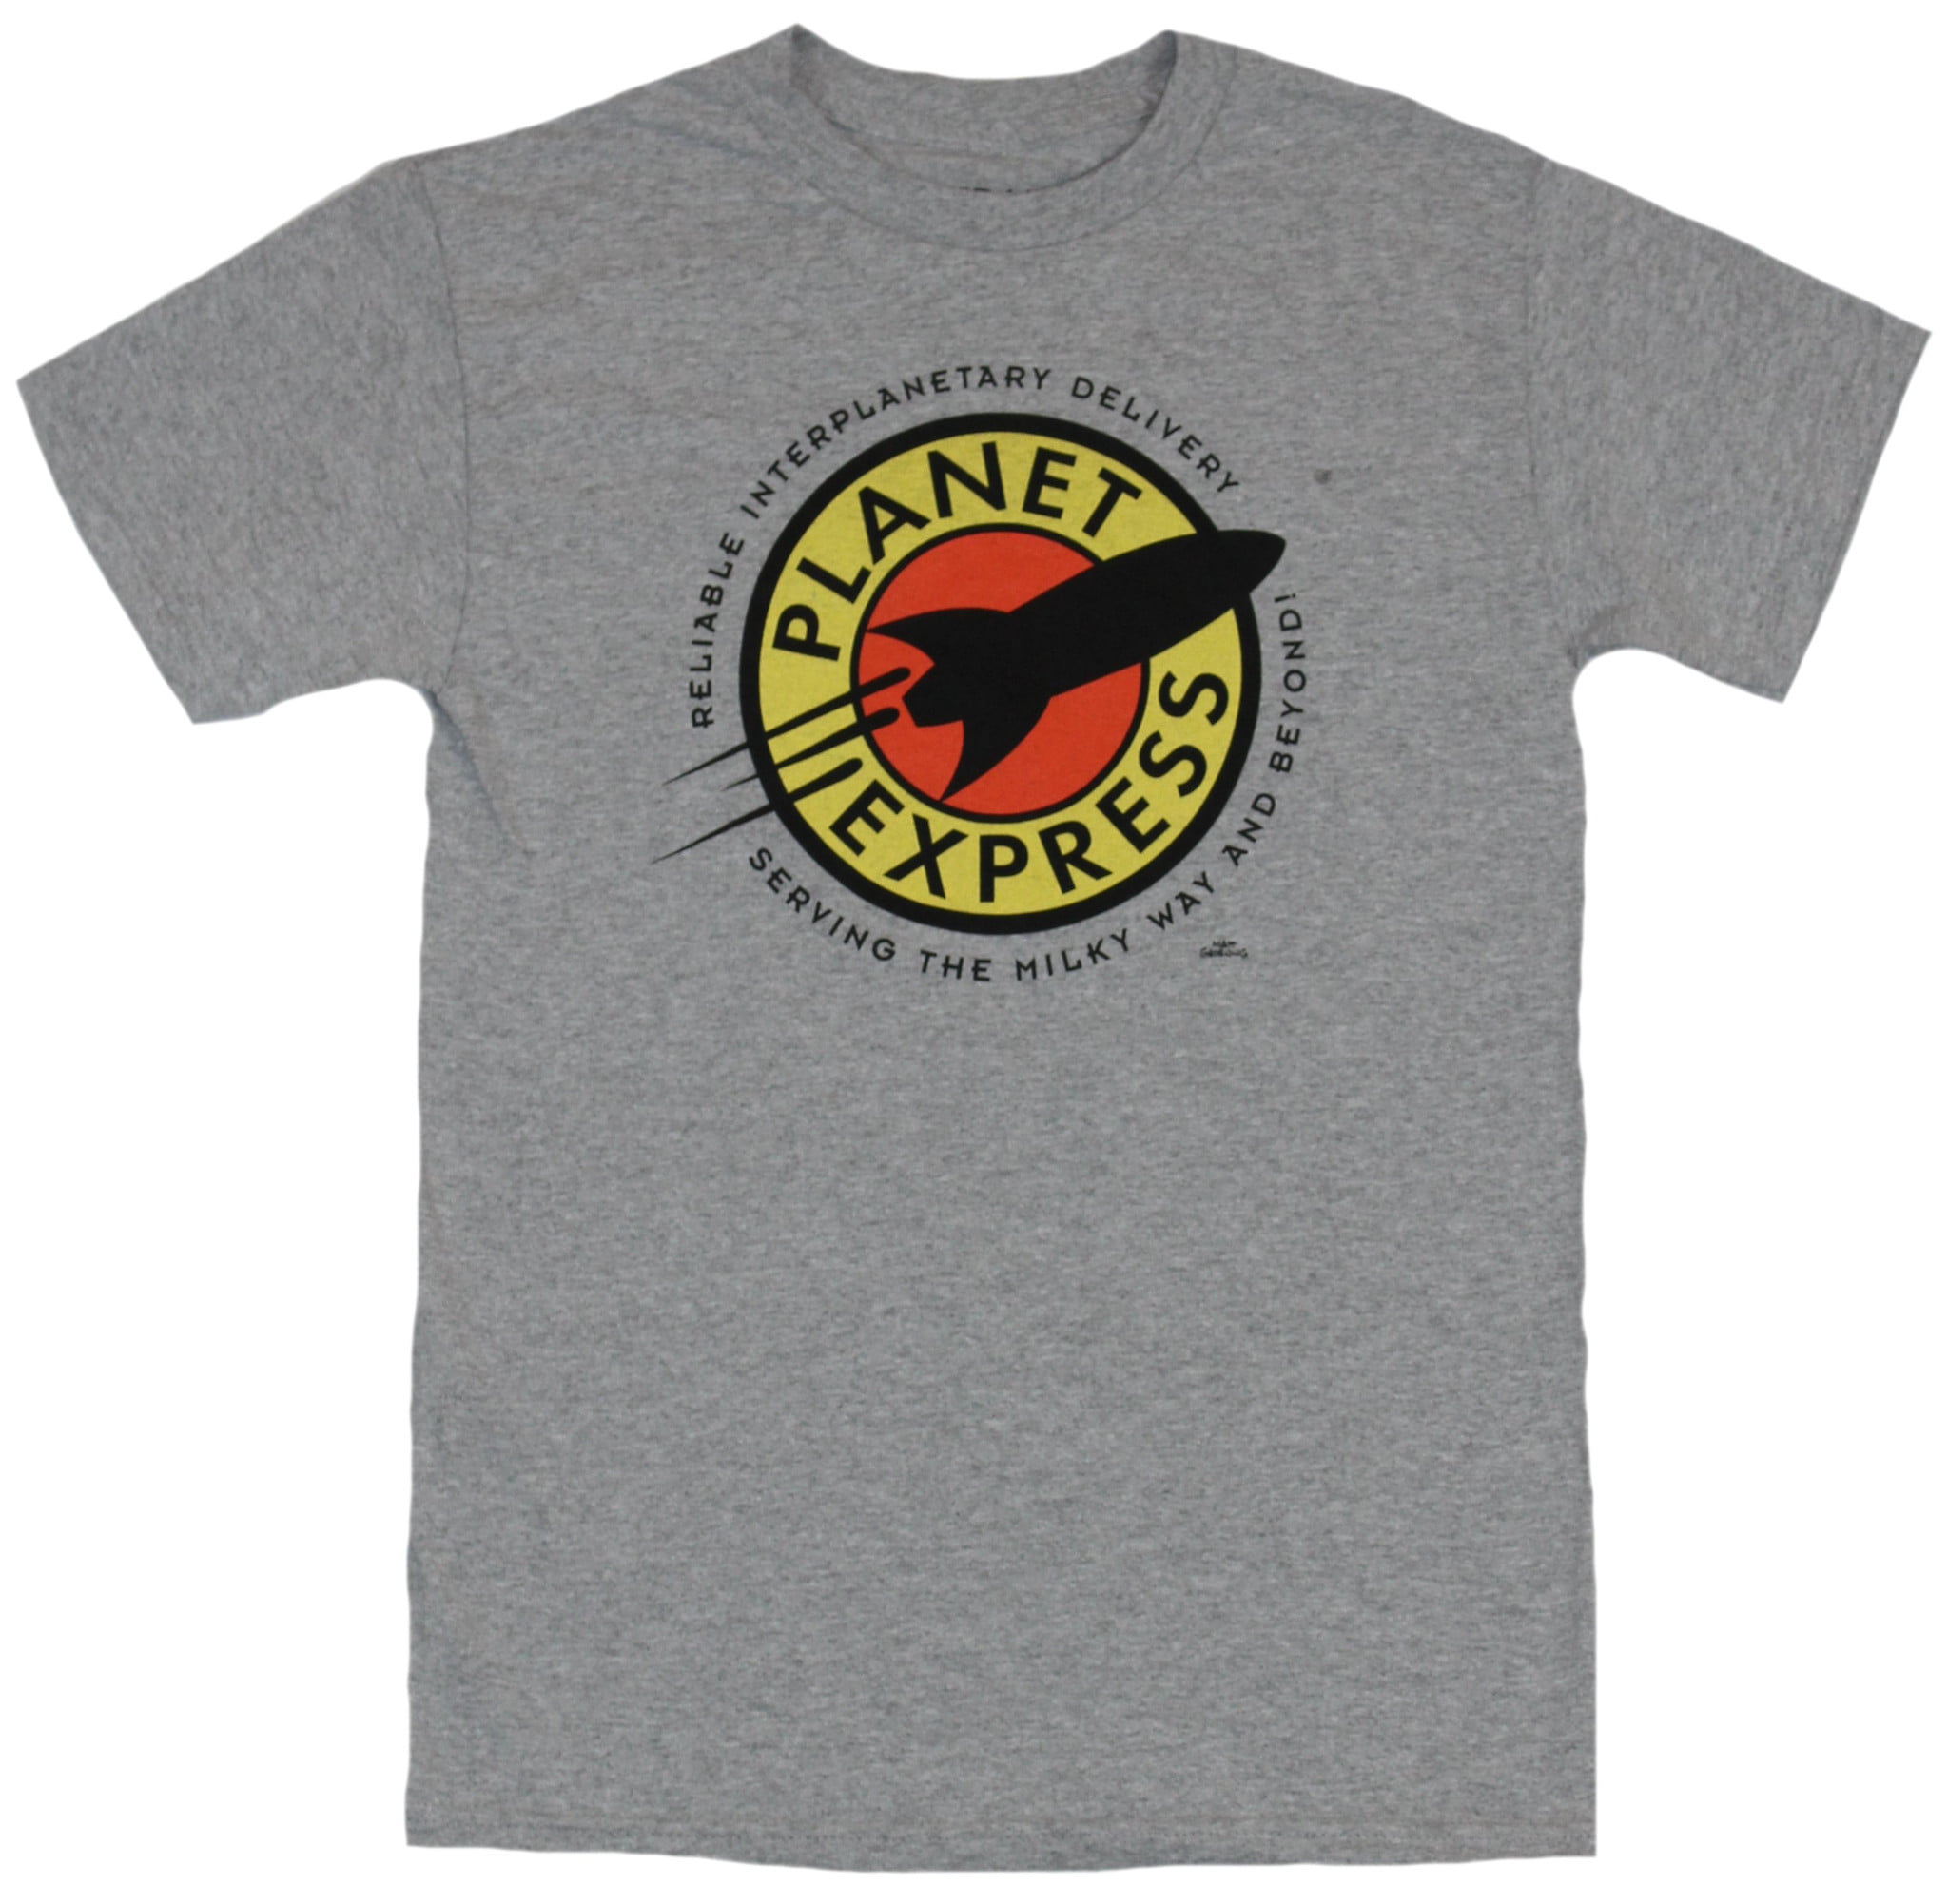 Buy Futurama Series Mens T-Shirt - Planet Express Delivery Service logo at ...